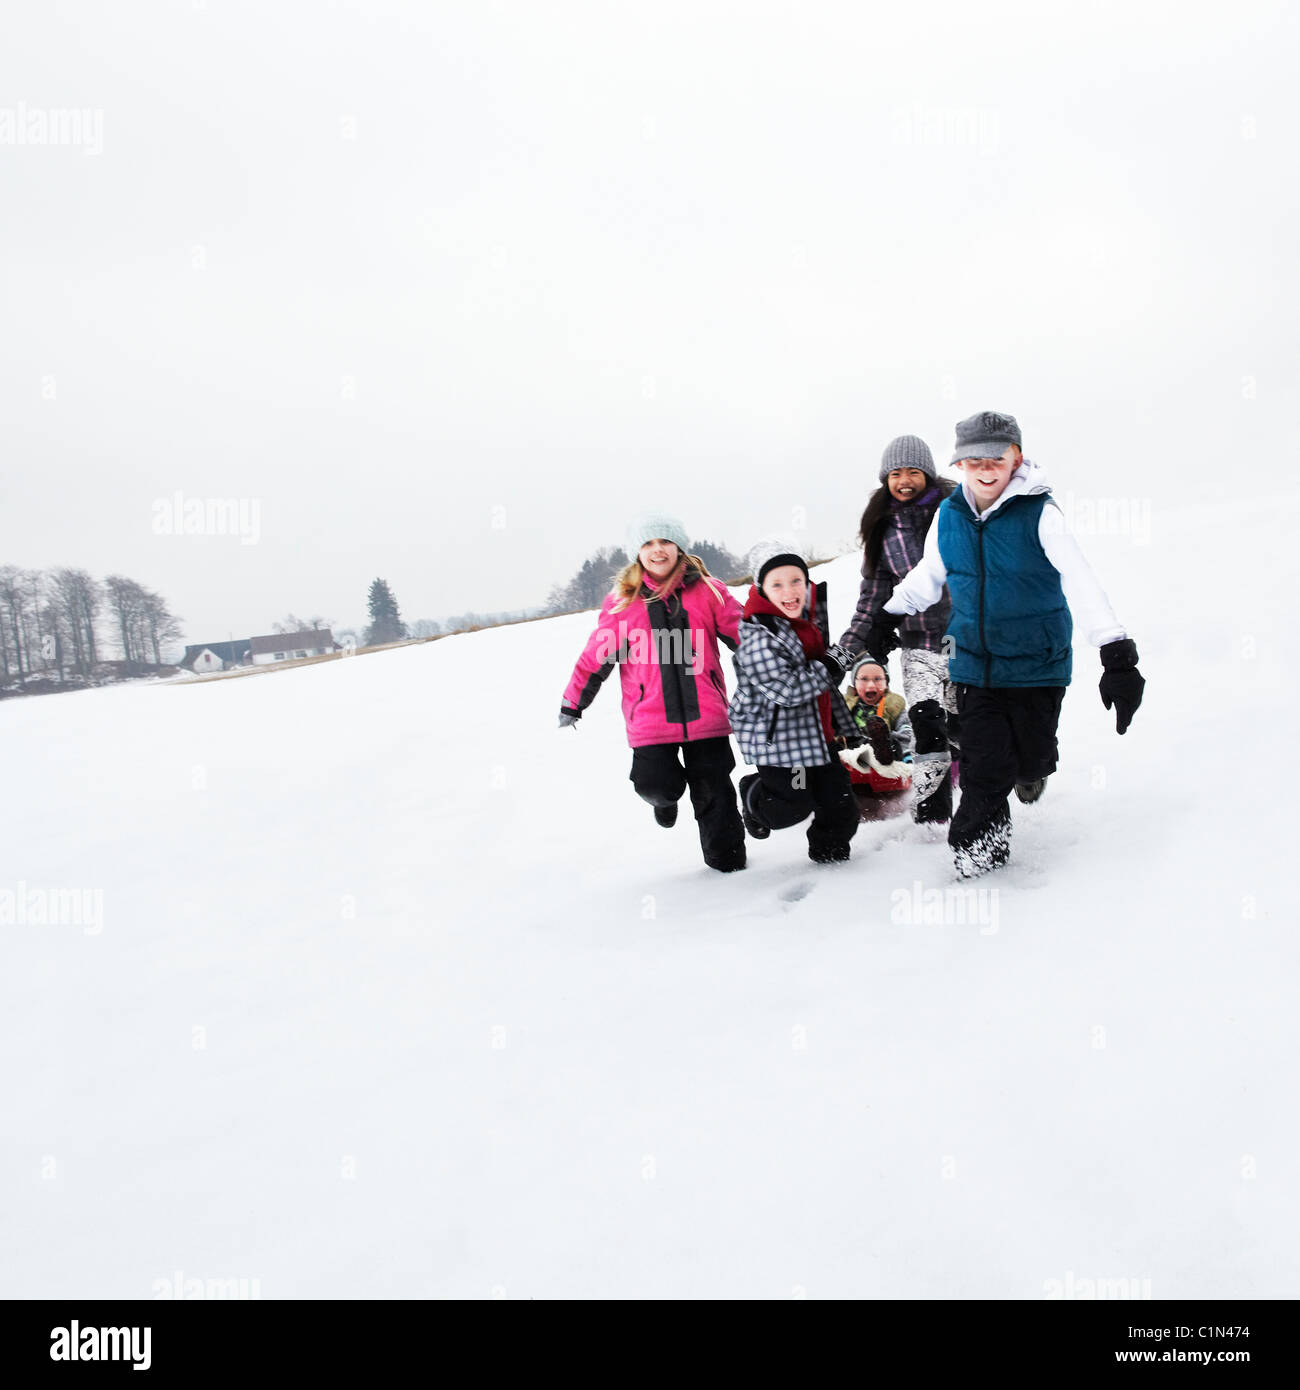 Children tobogganing on snow slope Stock Photo